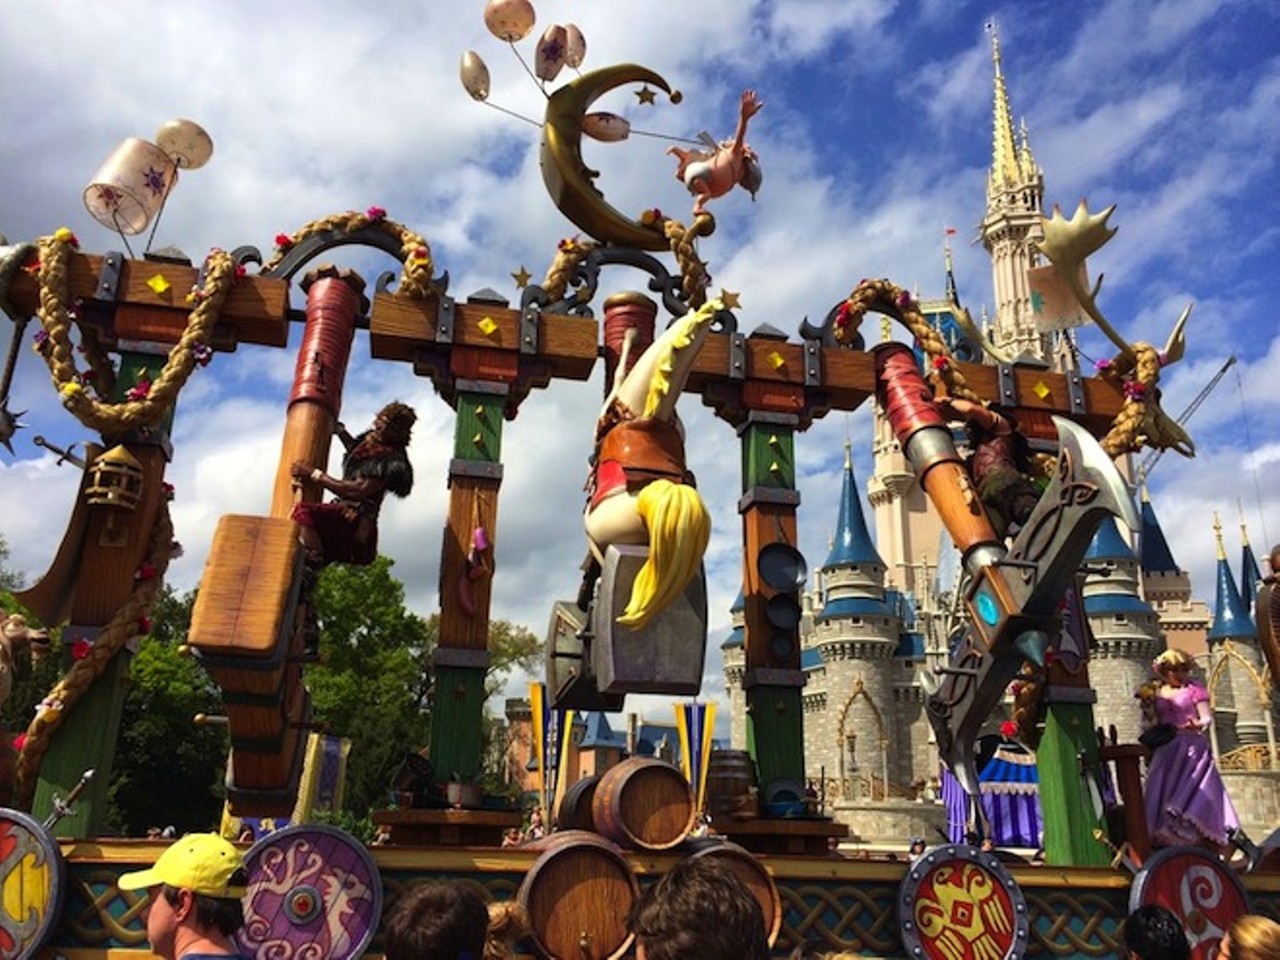 20 fairy-tale photos from Magic Kingdom's Festival of Fantasy